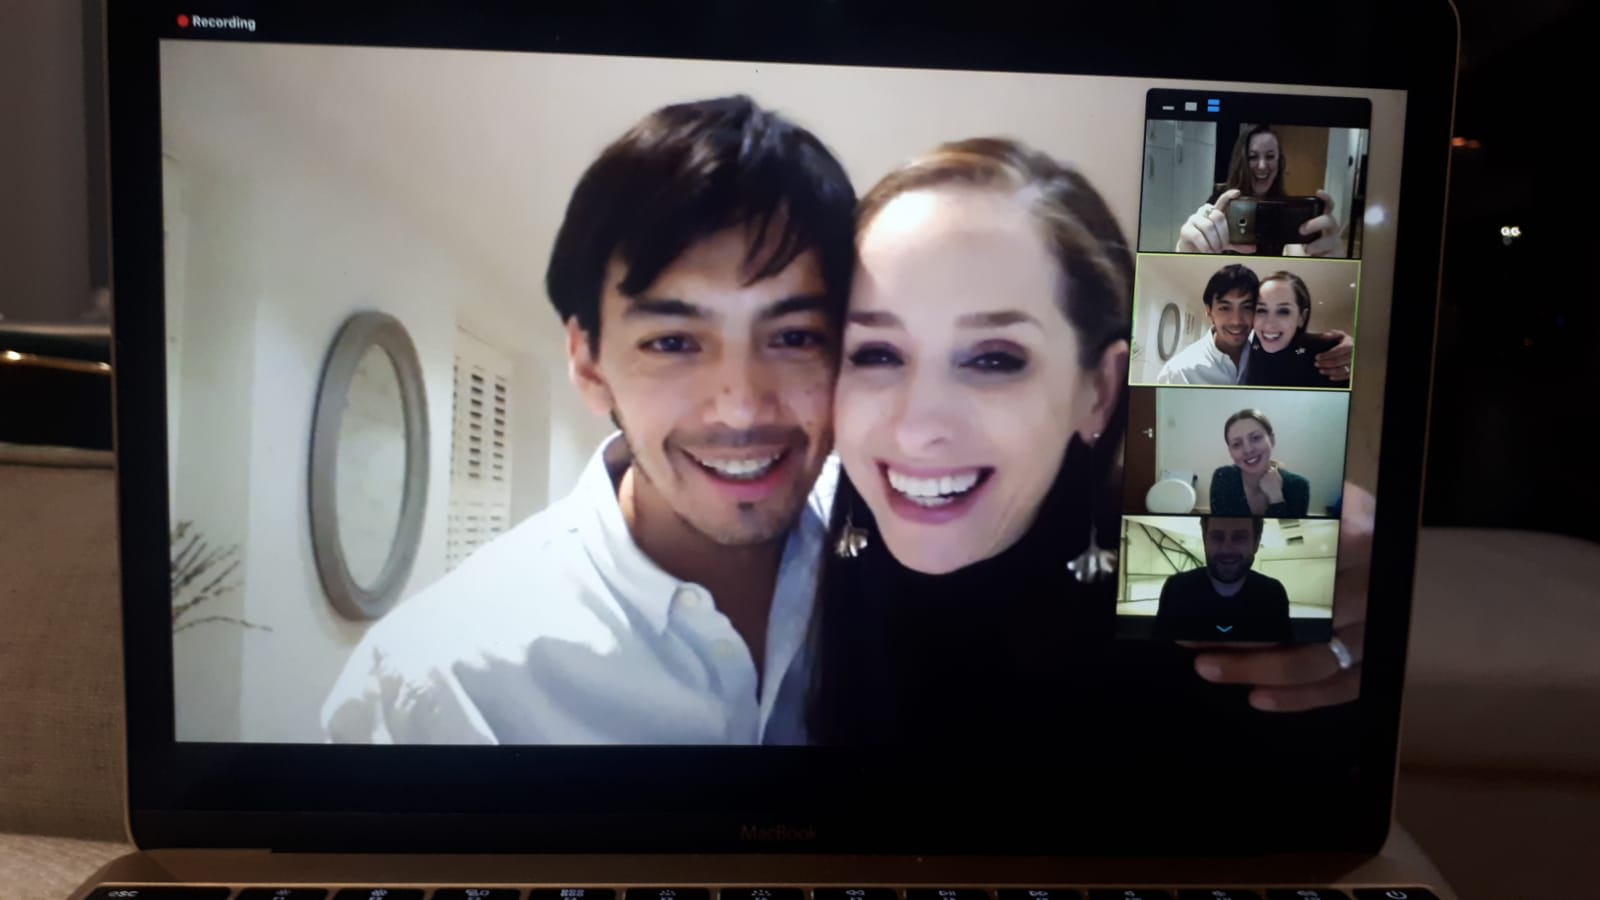 tango teachers smiling through a computer screen